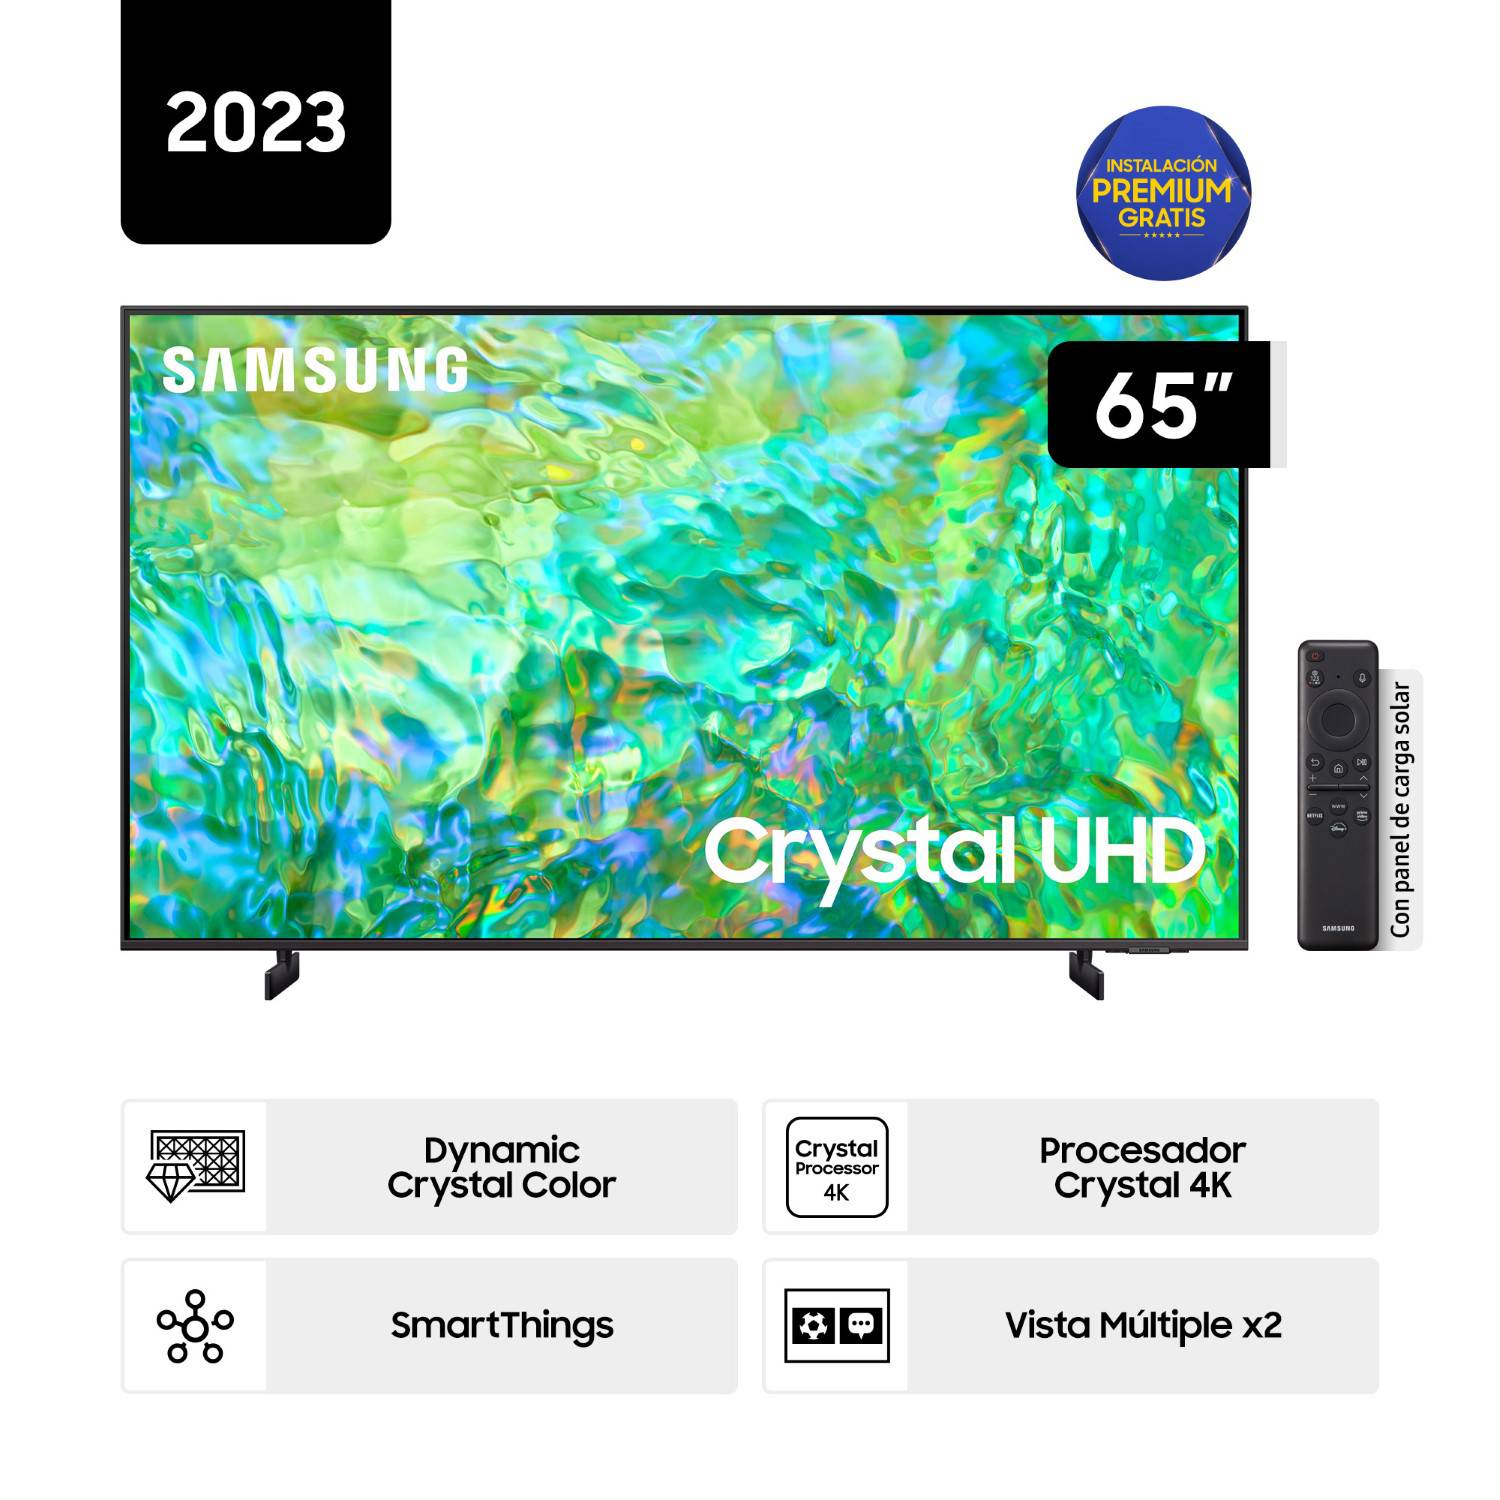 Televisor Samsung 65 pulgadas OLED 4K HDR Smart TV SAMSUNG